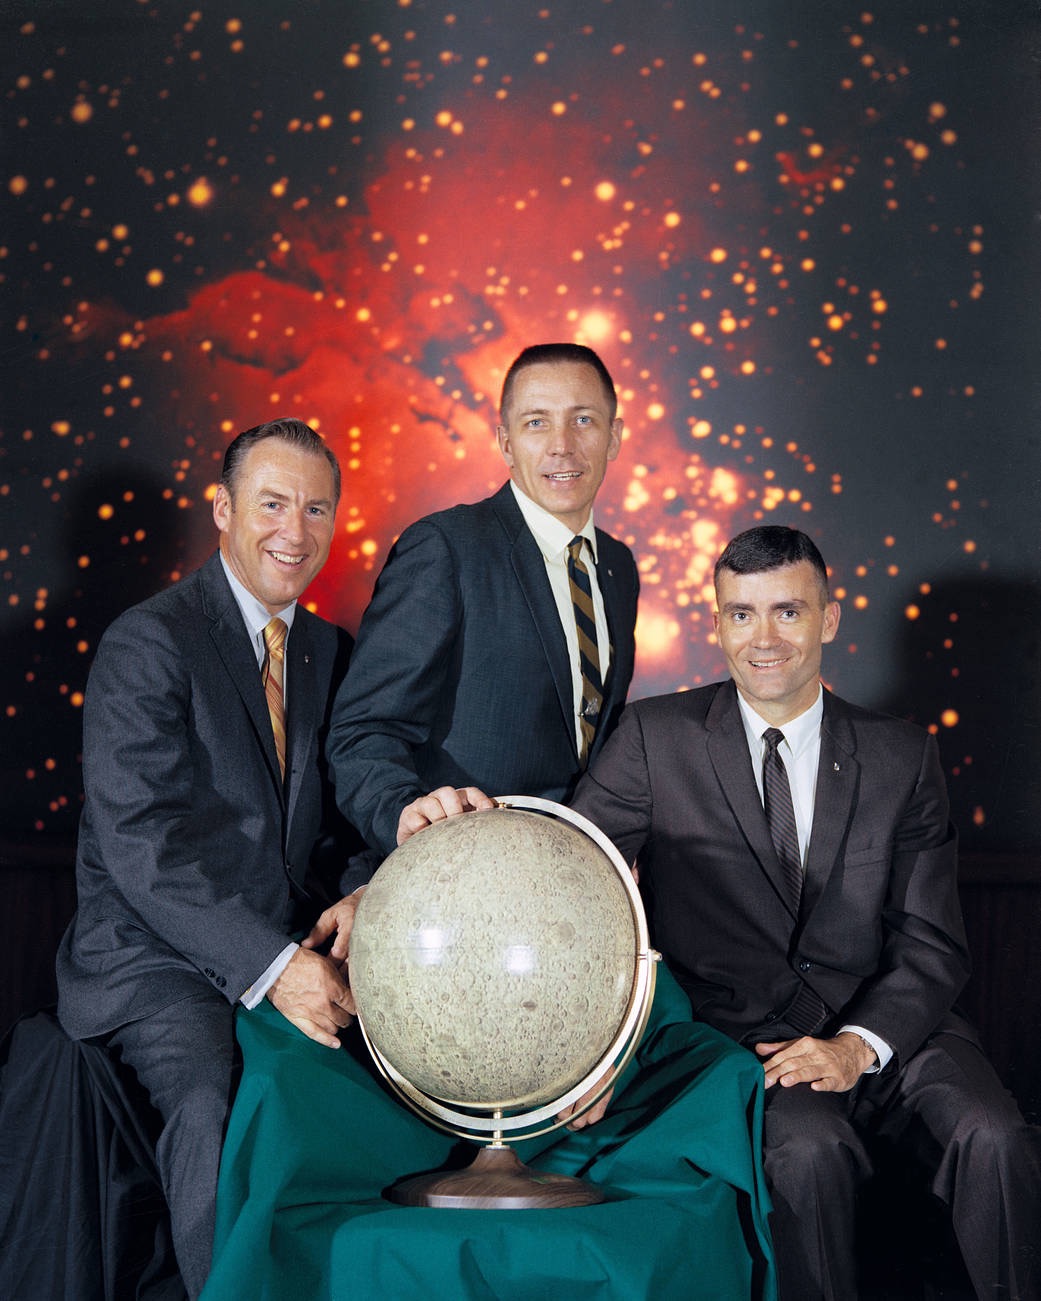 Apollo 13 crew portrait